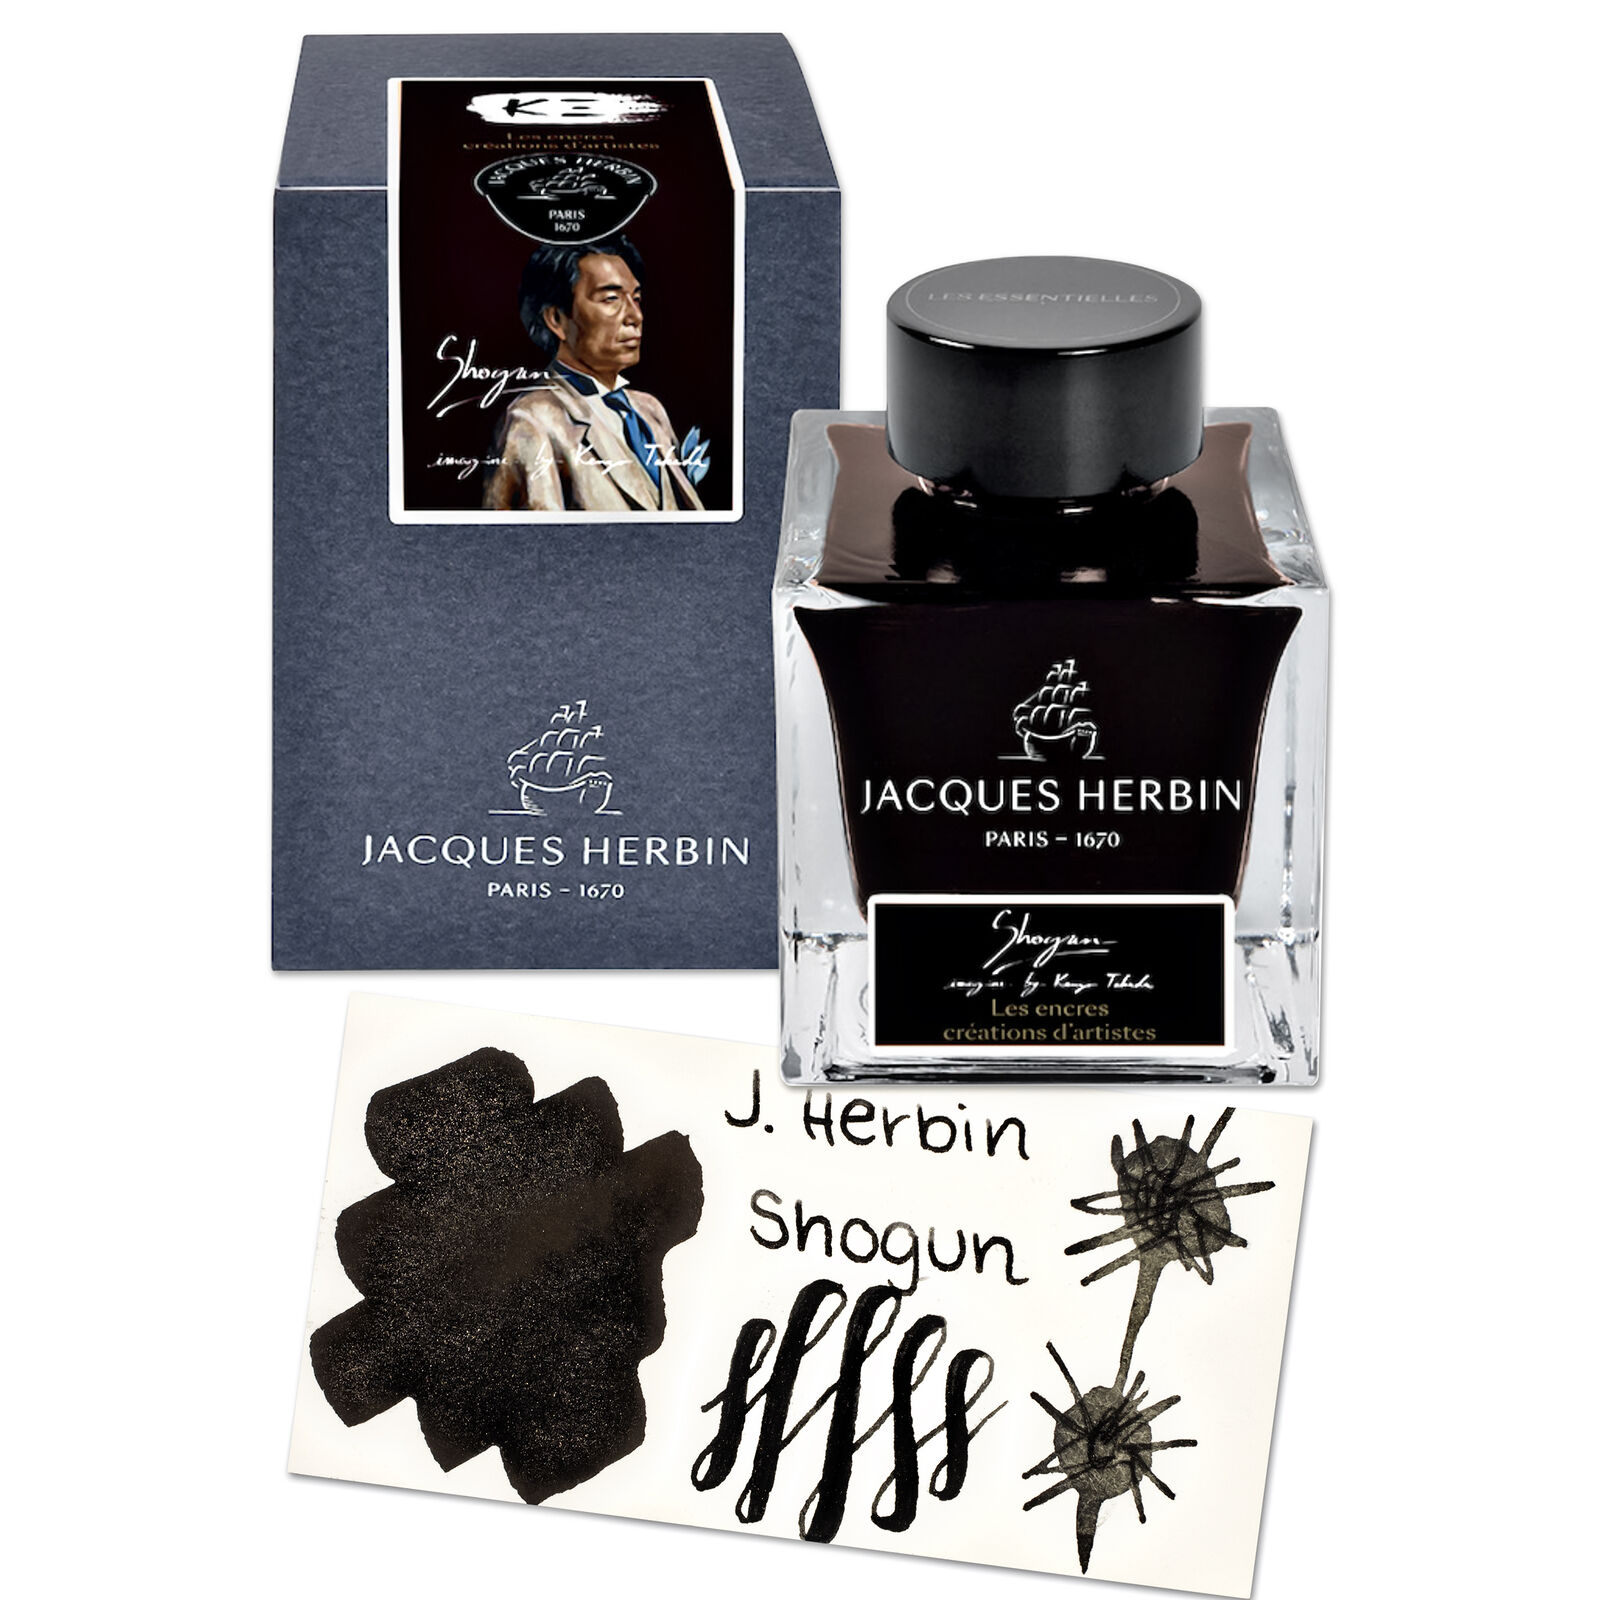 J. Herbin Essential Bottled Ink in “Shogun” by Kenzo Takada - 50 mL - NEW